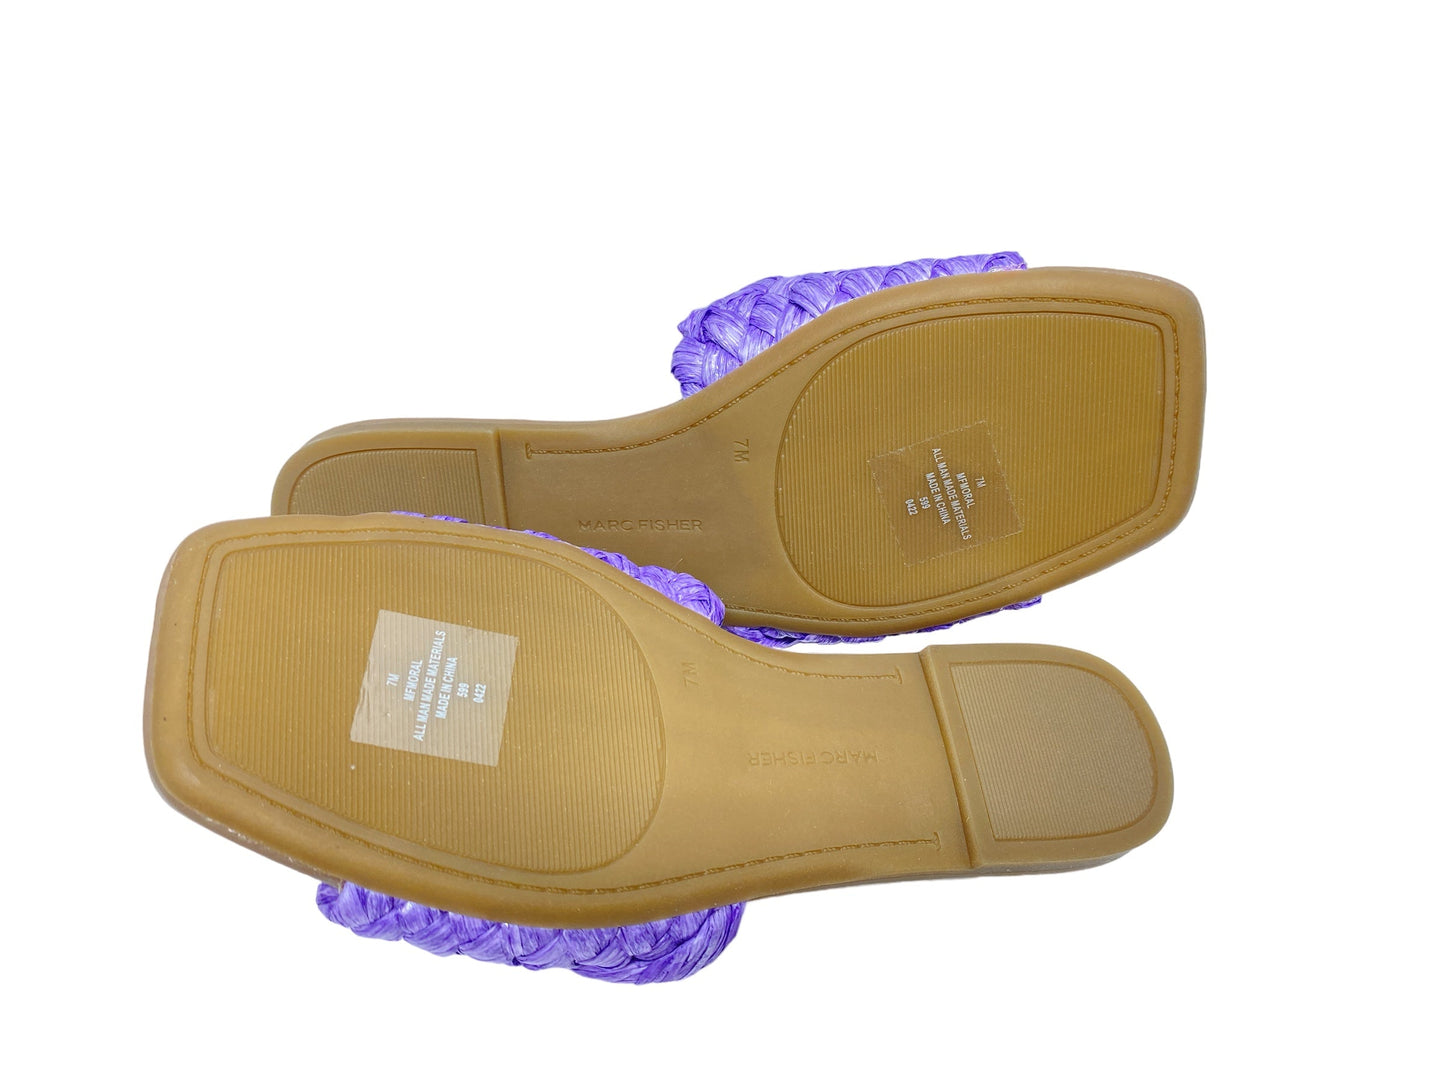 Purple Sandals Flats Marc Fisher, Size 7